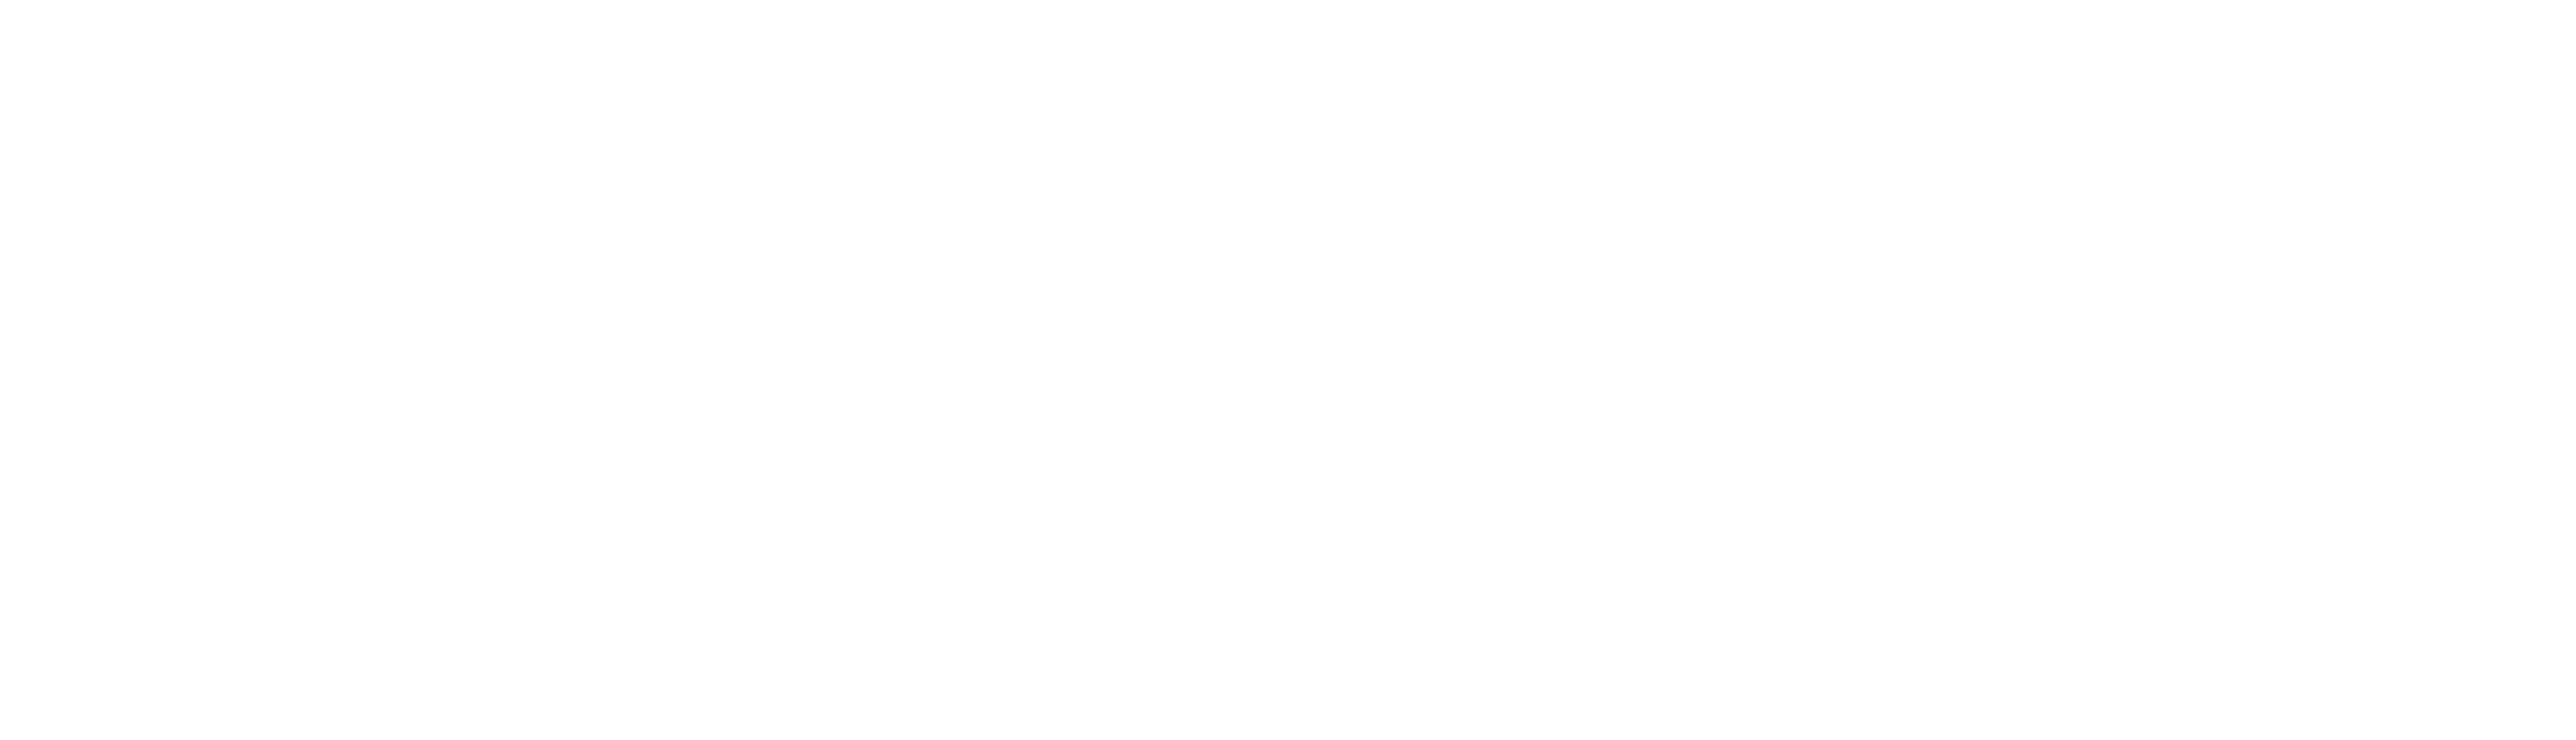 Clayfield College